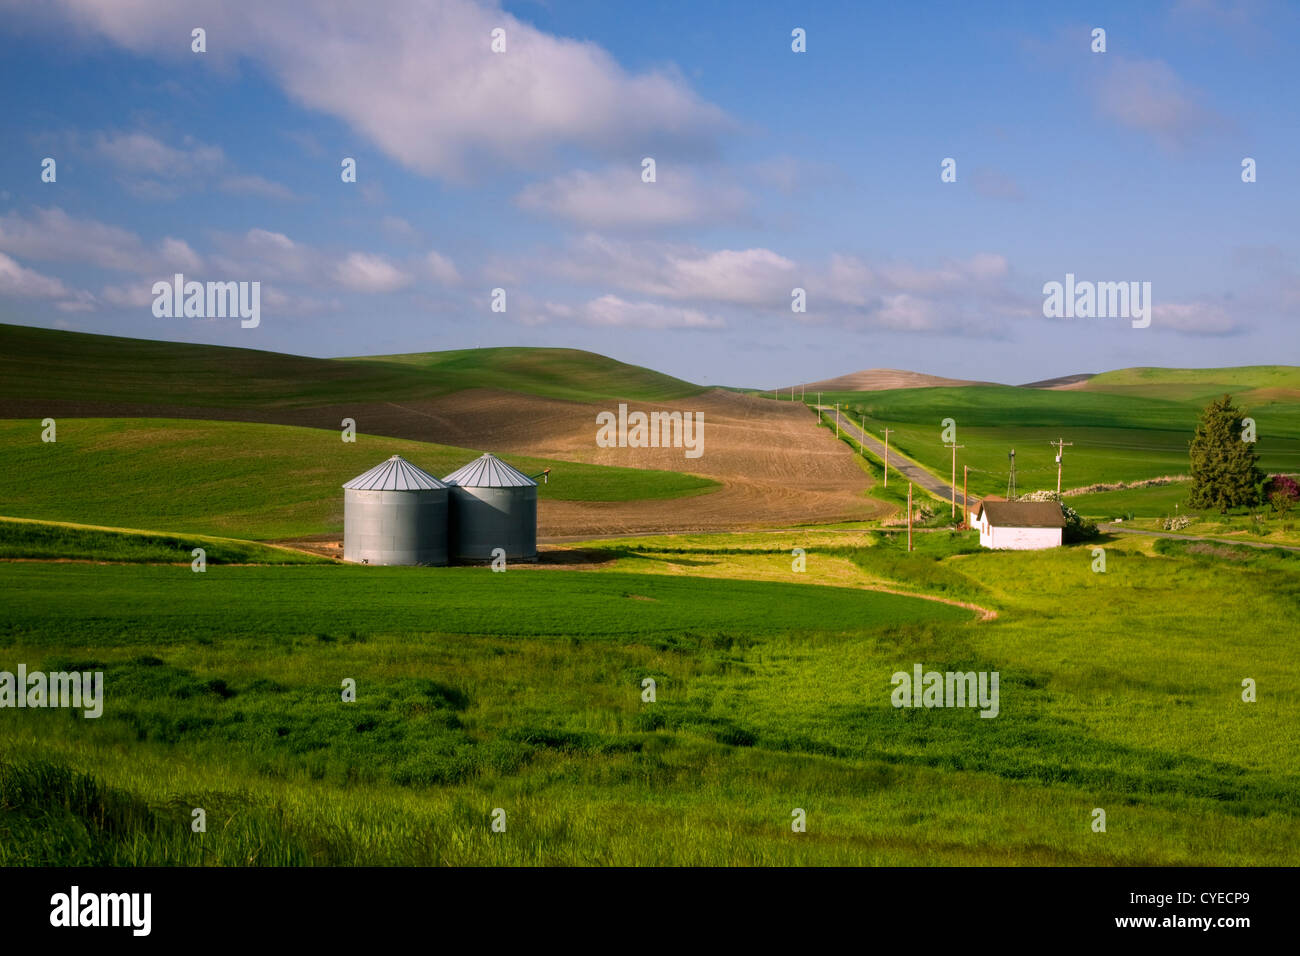 WA05486-00...WASHINGTON - Grain silos in a field near Steptoe in the agricultural Palouse region. Stock Photo